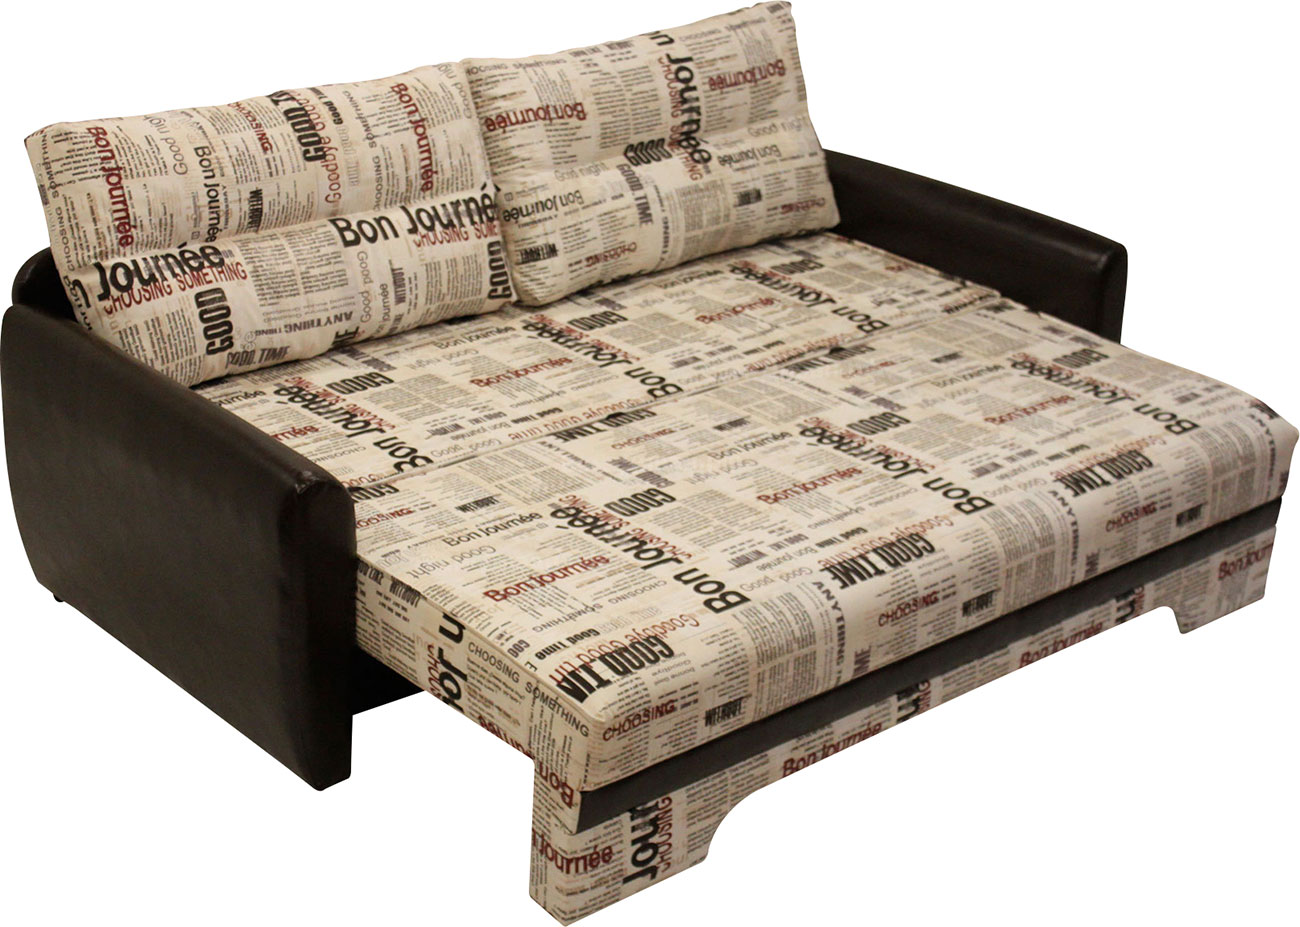 Купить диван Наташа 160 МП 1 - диван еврокнижка Наташа 160 МП 1 недорого вМоскве - цена 29060 руб.